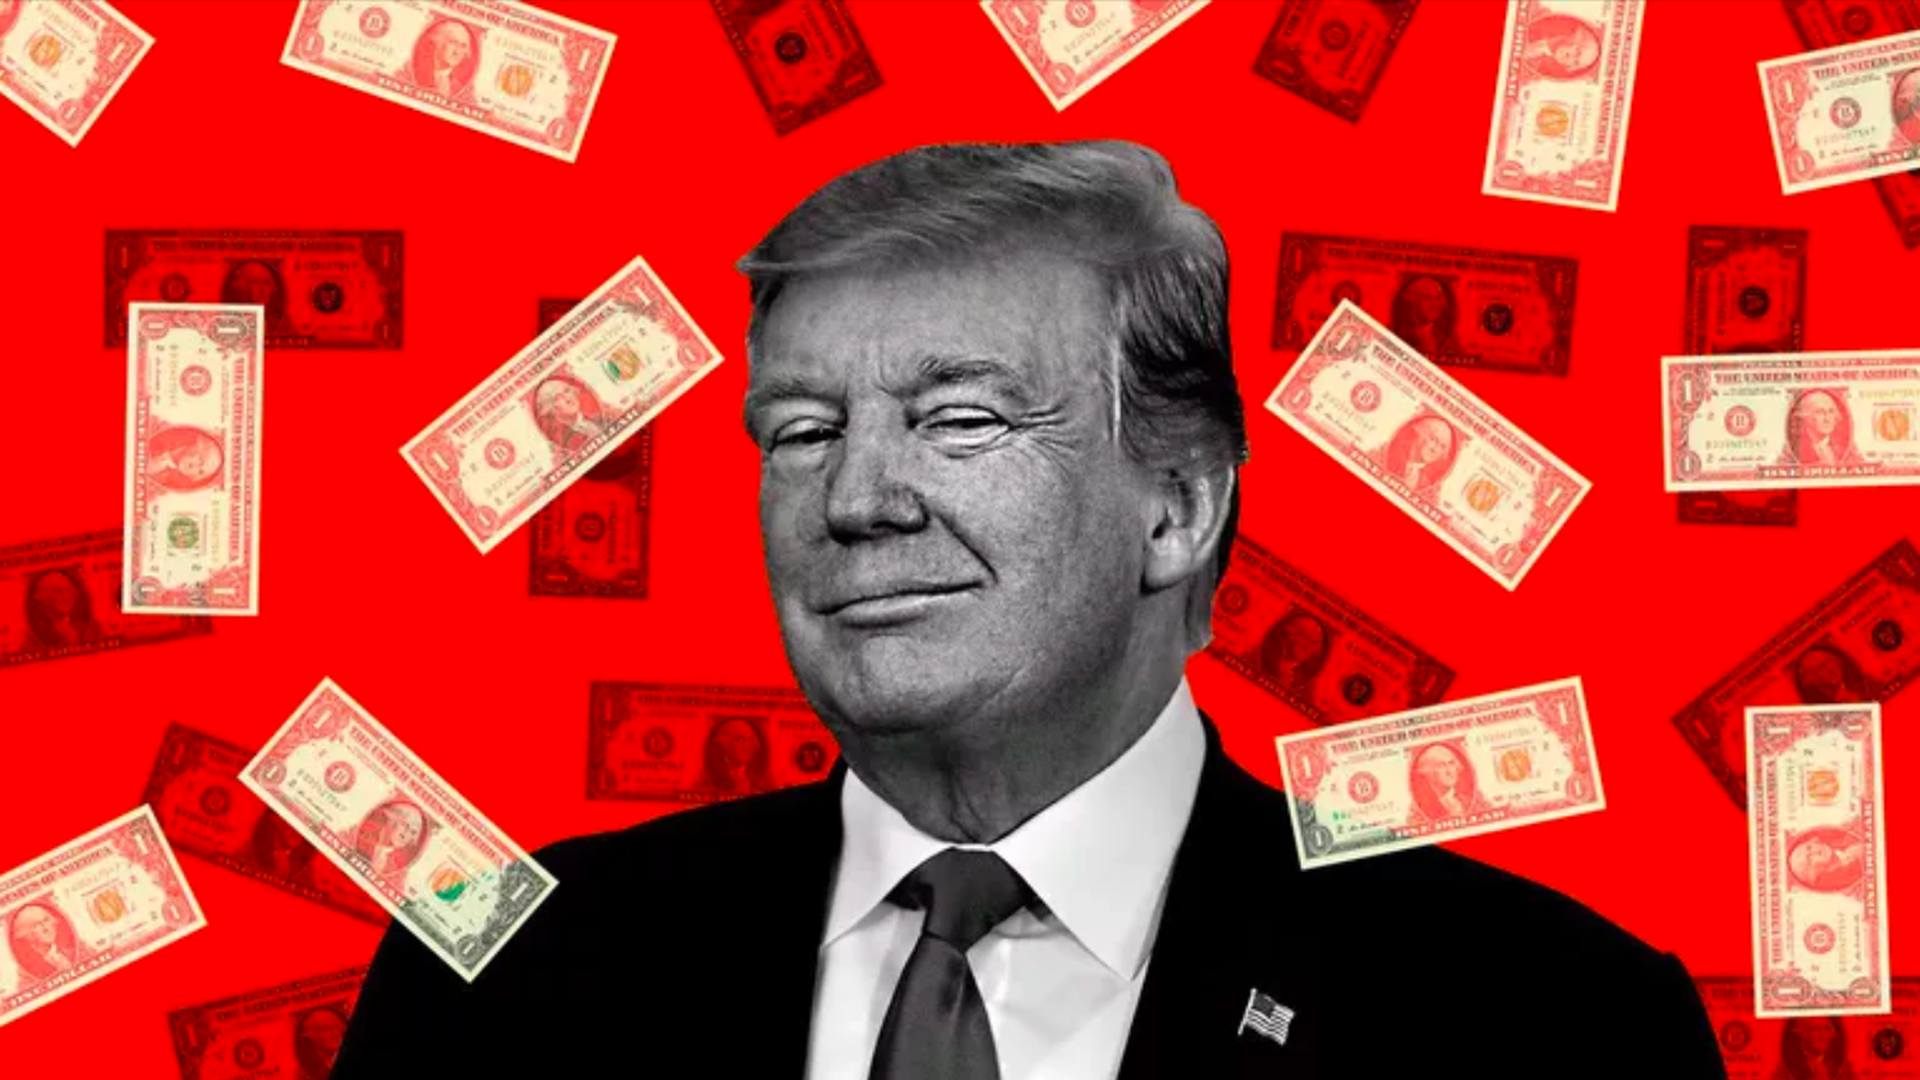 In this illustration, US dollars fall around Trump's head. He's smirking.